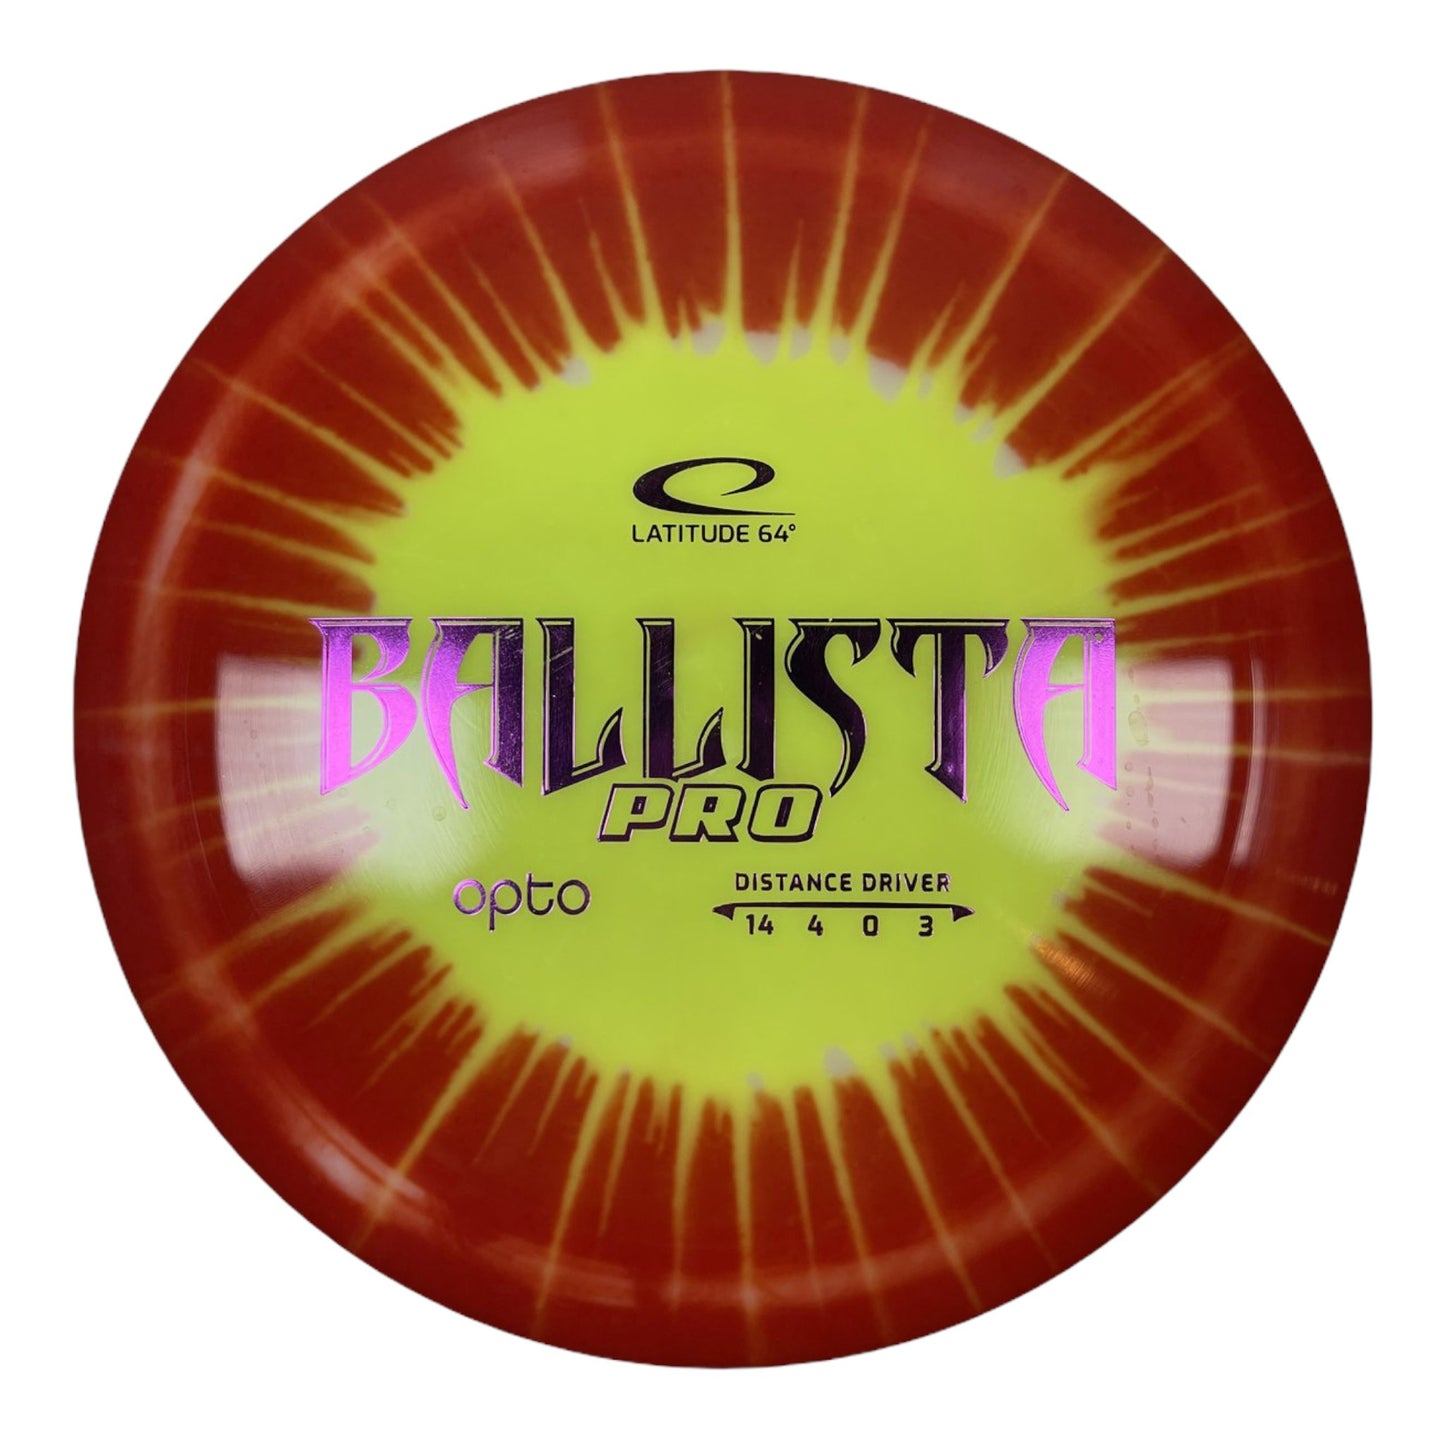 Latitude 64 Ballista Pro | Opto | Red/Tiedye 173-175g Disc Golf